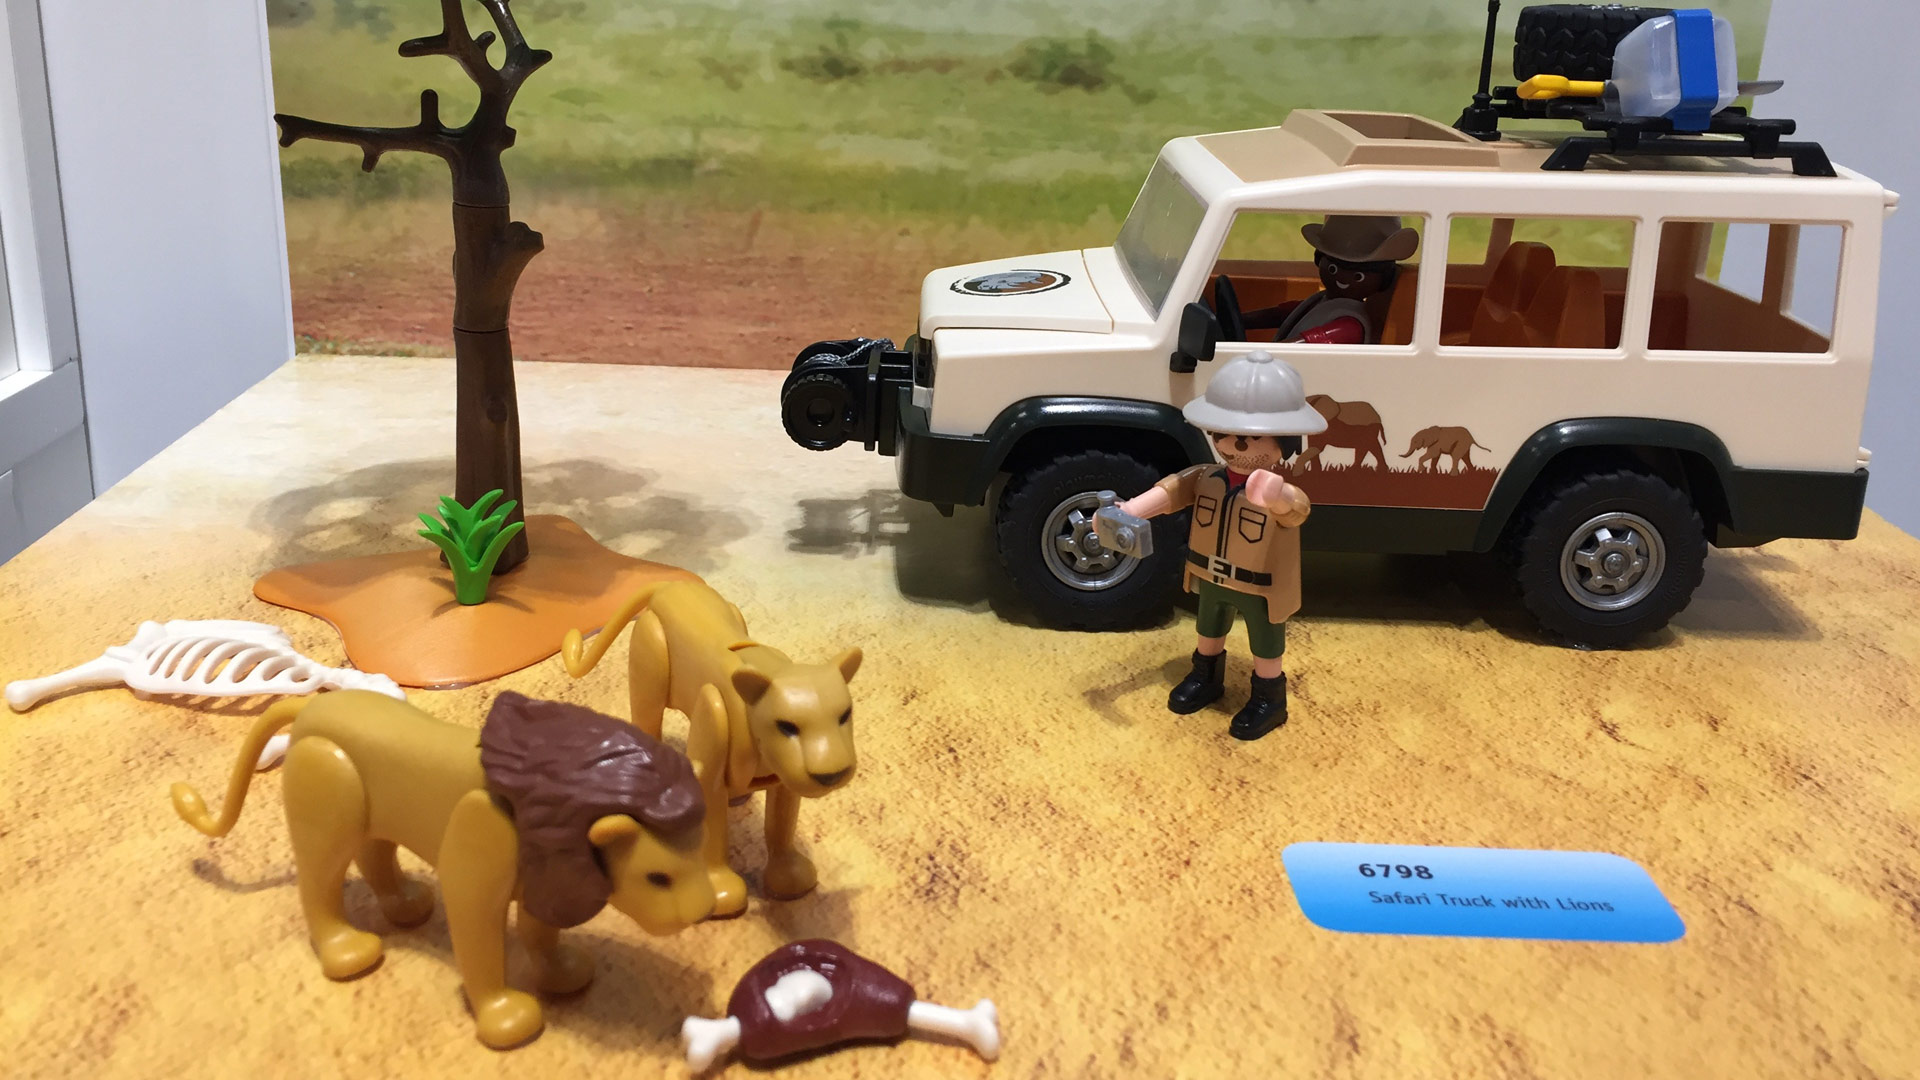 Playmobil Wildlife Set 6798 Safari Truck with Lions at Toy Fair 2017